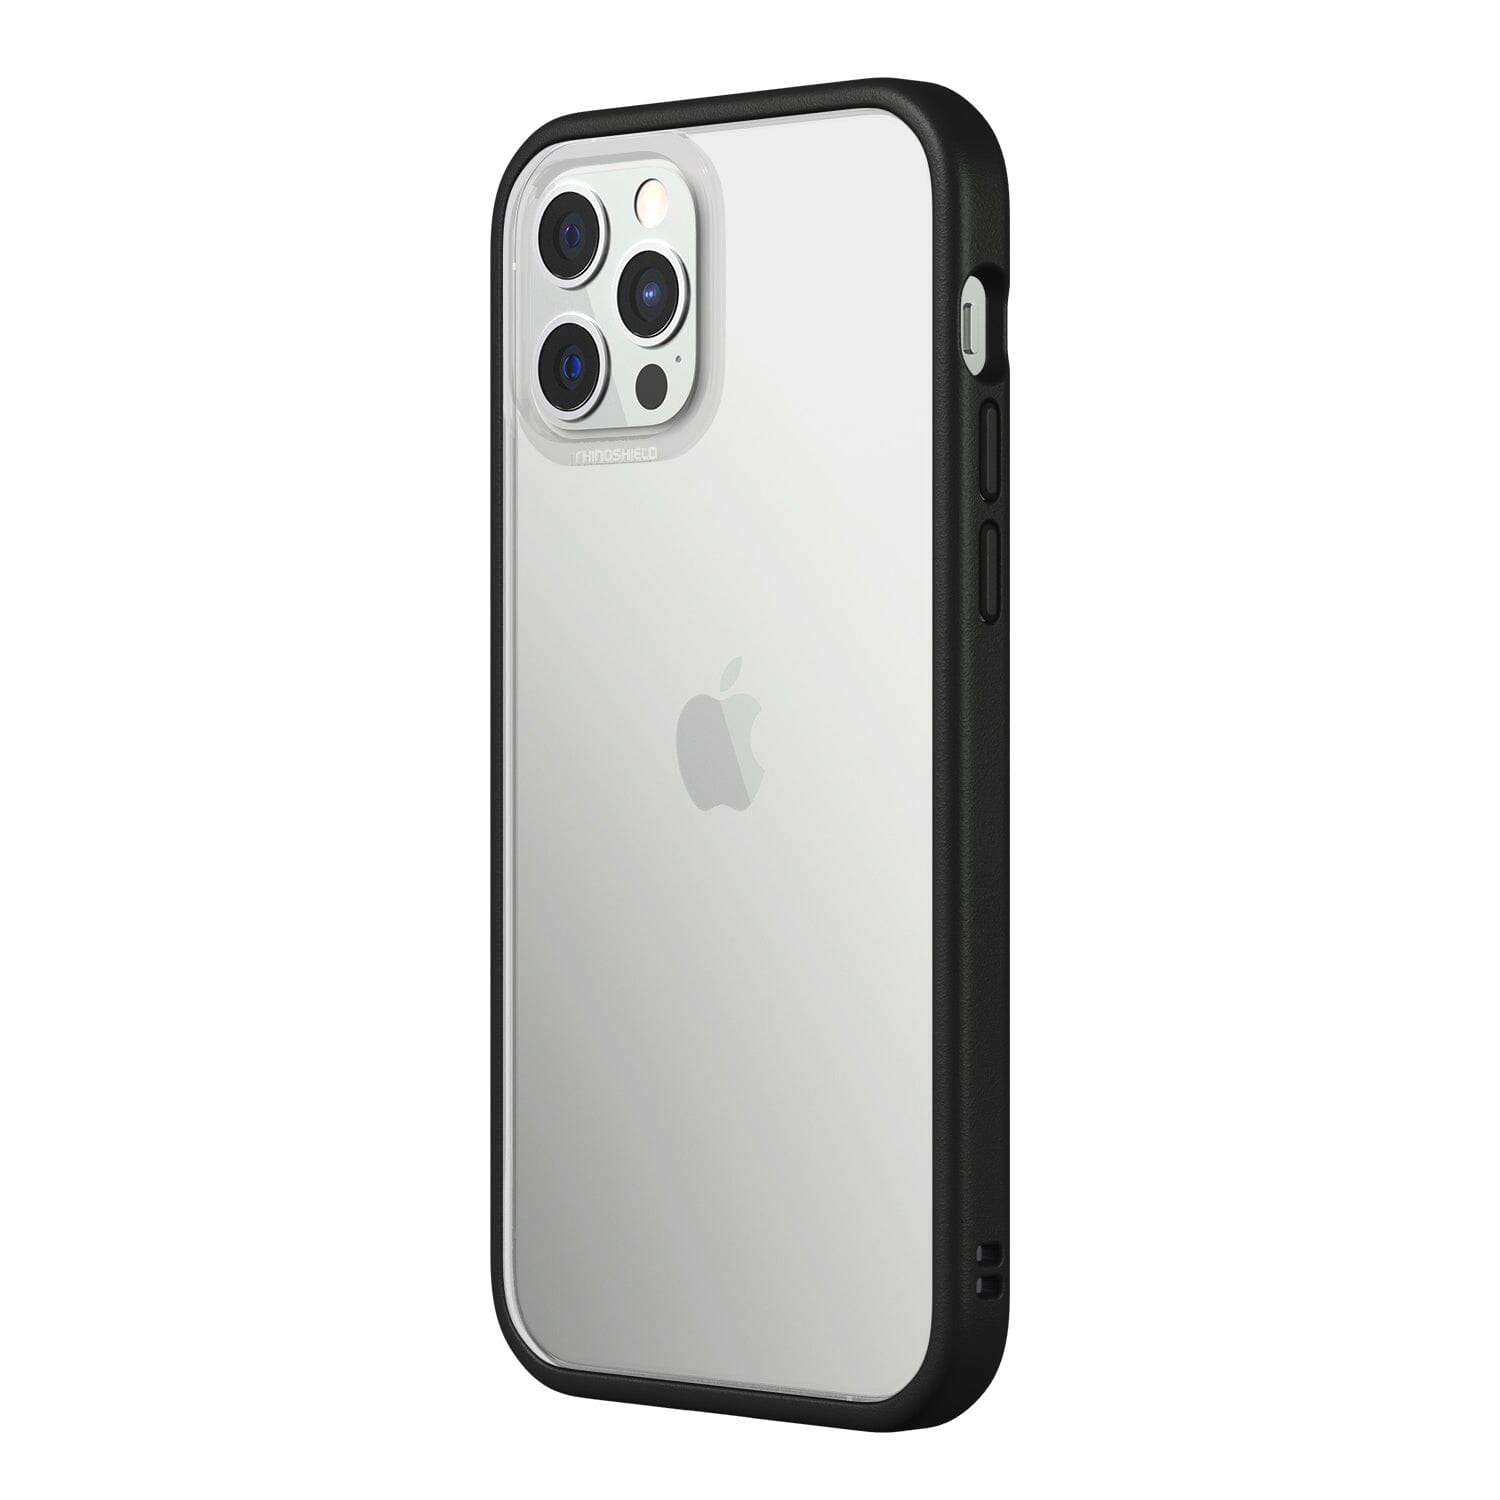 RhinoShield Mod NX Modular Case for iPhone 12 Series (2020) iPhone 12 Series RhinoShield iPhone 12/12 Pro 6.1" Black 